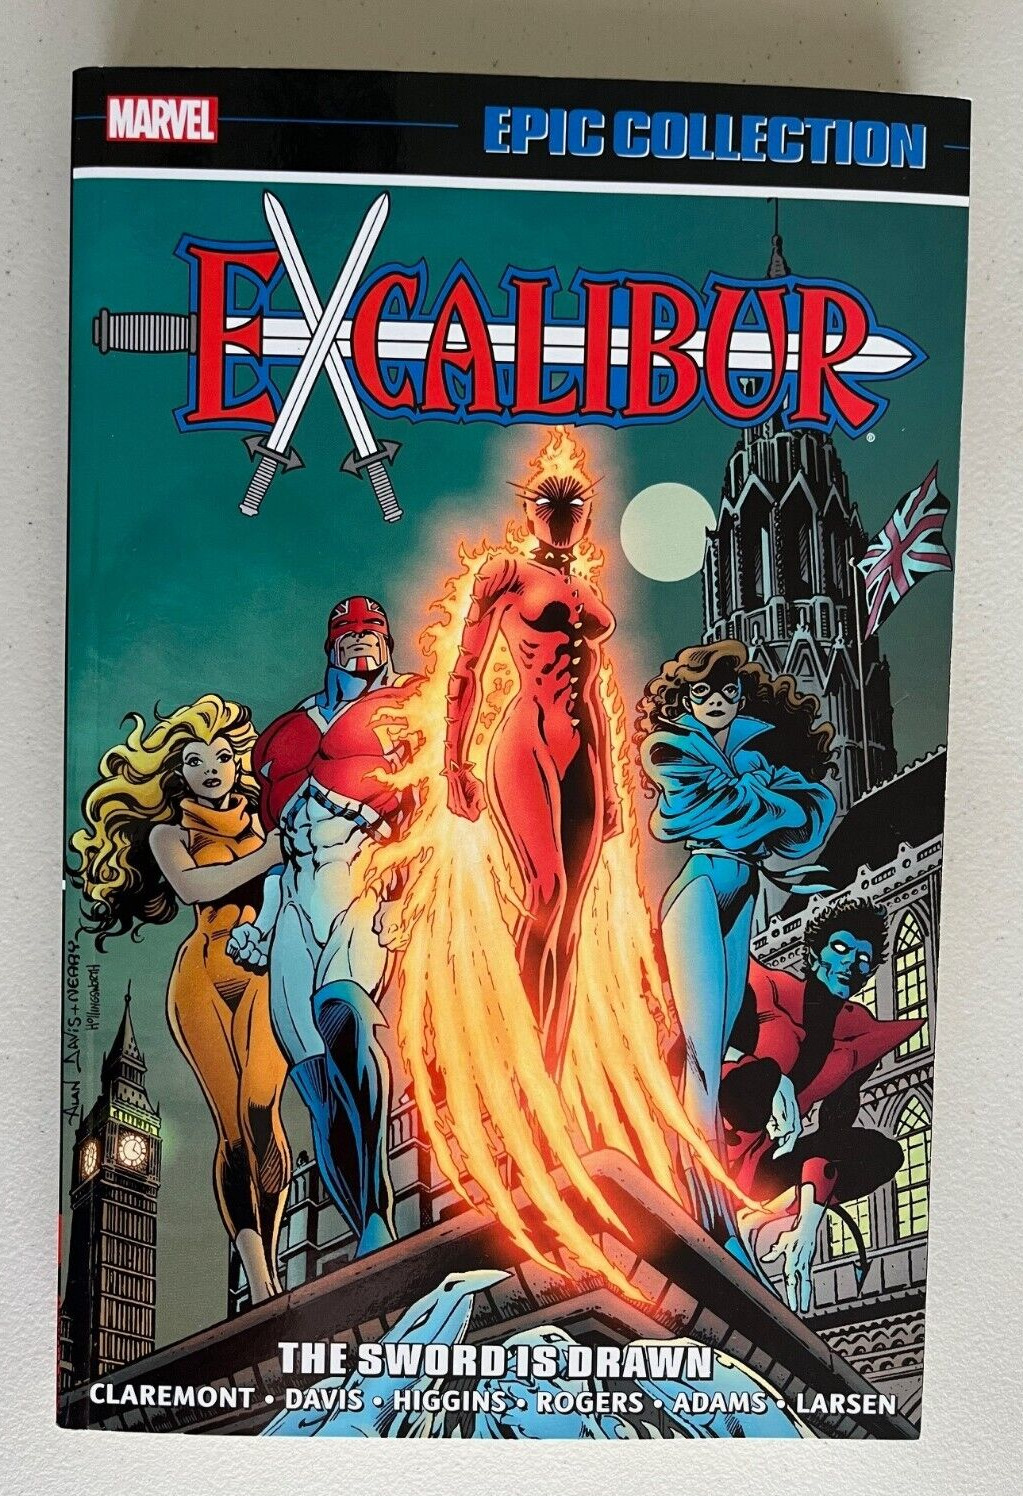 Excalibur Epic Collection Vol 1 TPB by Claremont and Alan Davis Marvel Comics